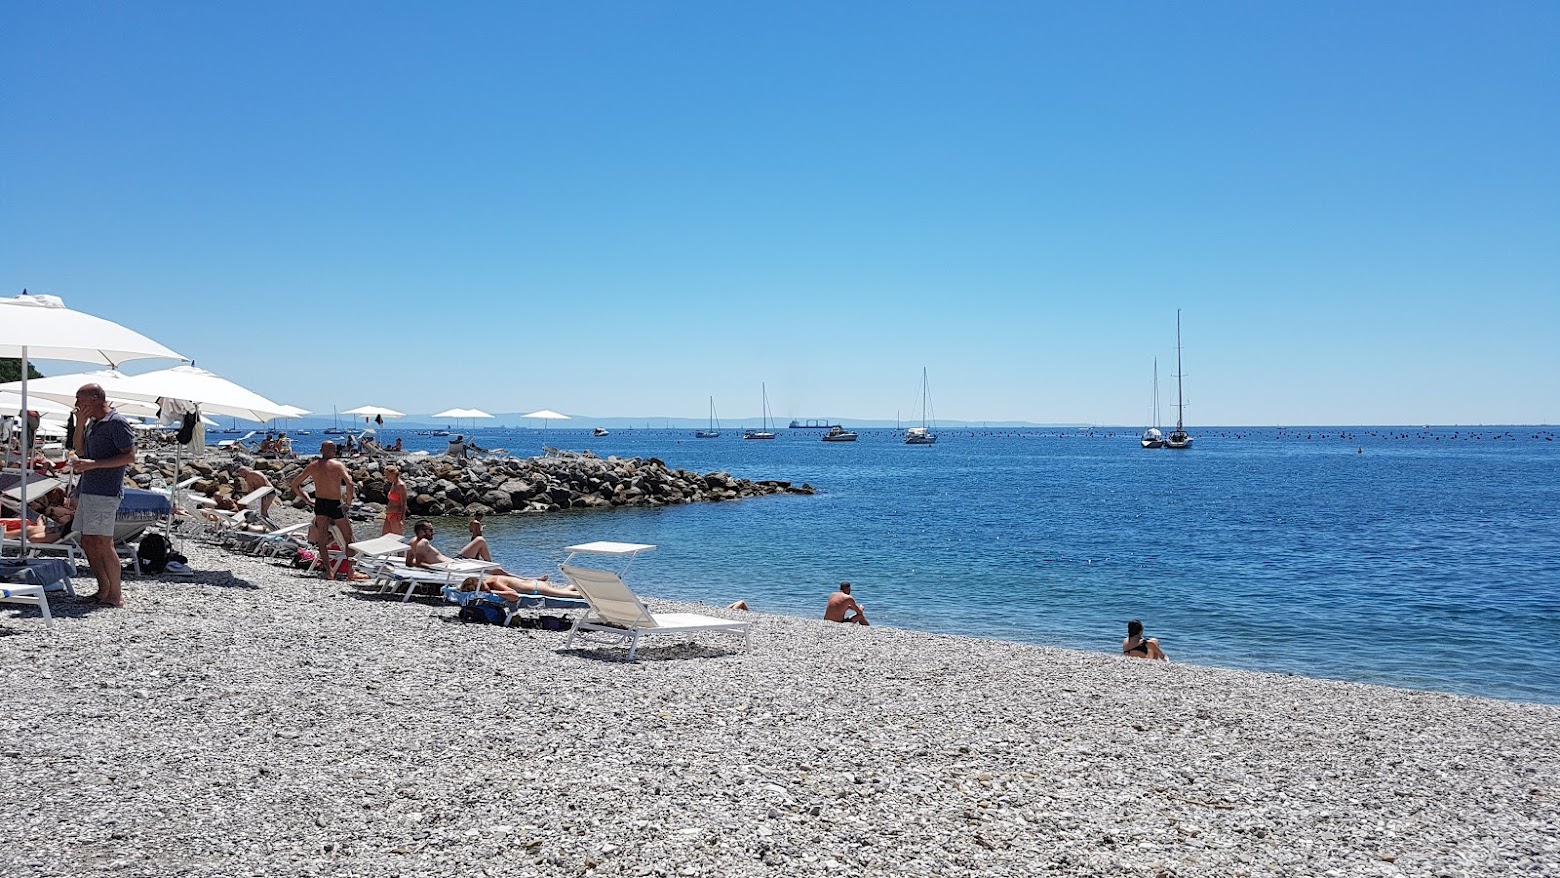 Foto af Spiaggia di Portopiccolo Sistiana bakket op af klipperne